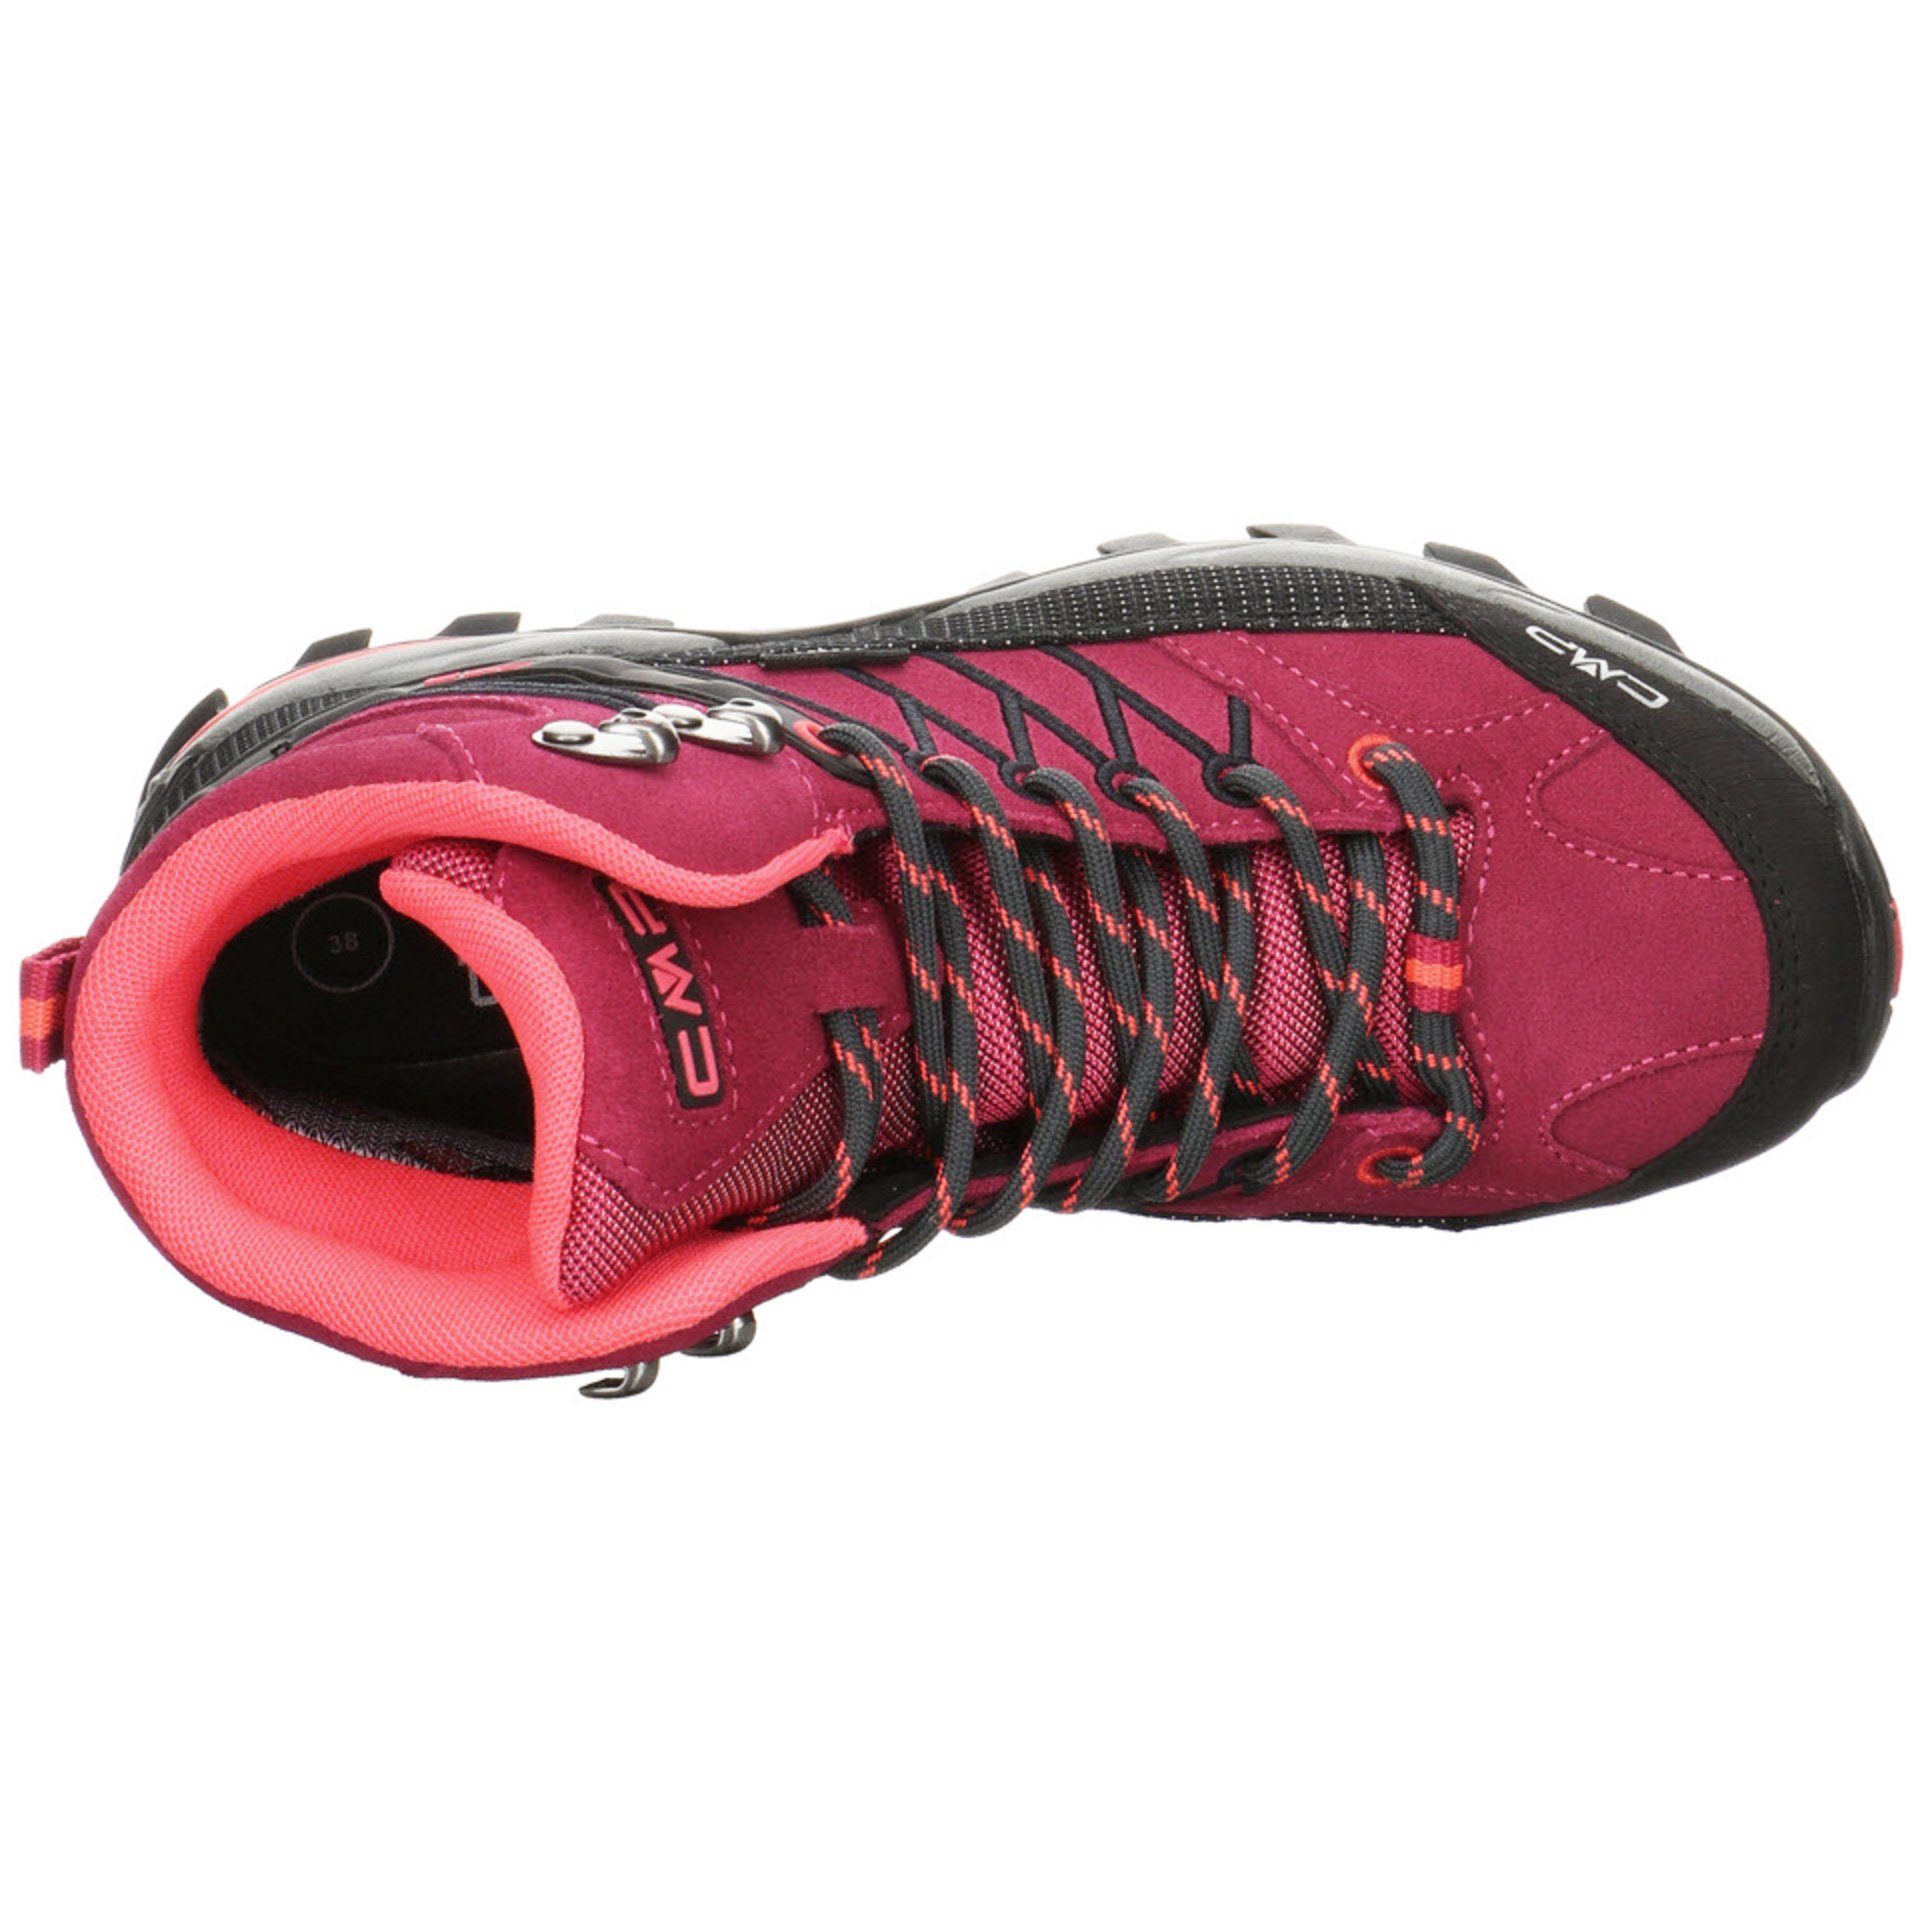 CMP Mid Outdoorschuh MAGENTA-ANTRACITE Outdoorschuh Damen Schuhe Outdoor Rigel Leder-/Textilkombination